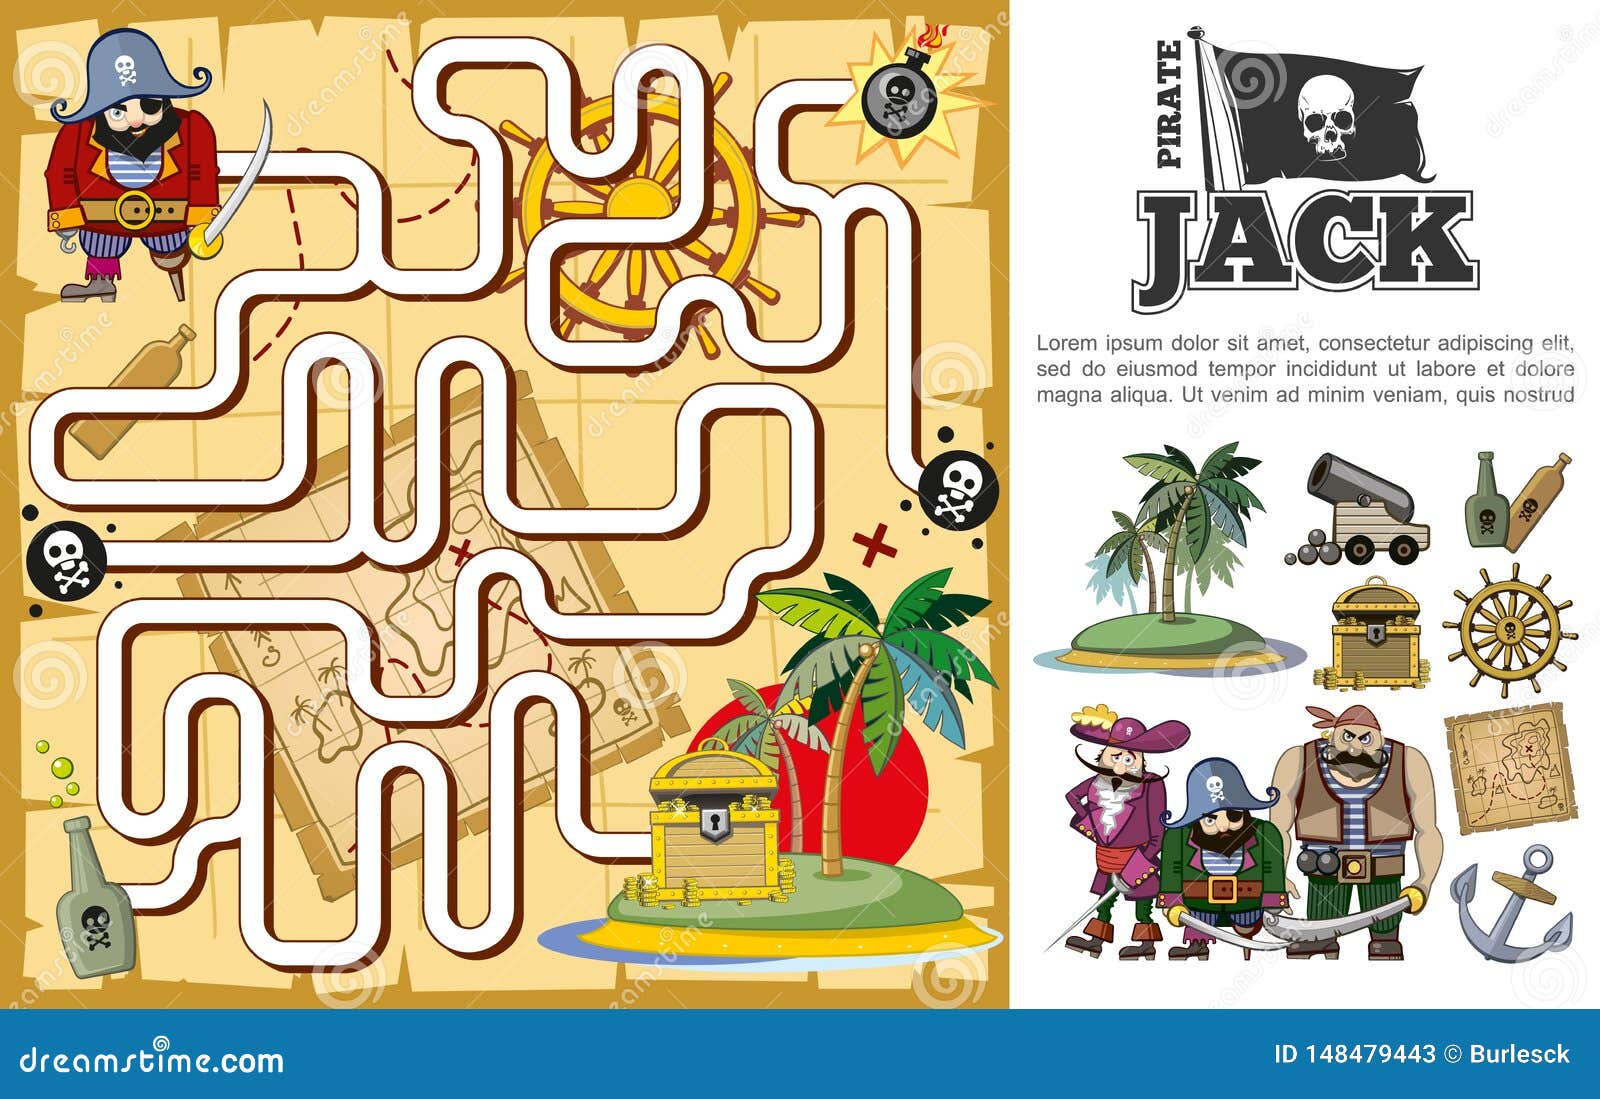 cartoon pirate treasure hunt maze concept stock vector illustration